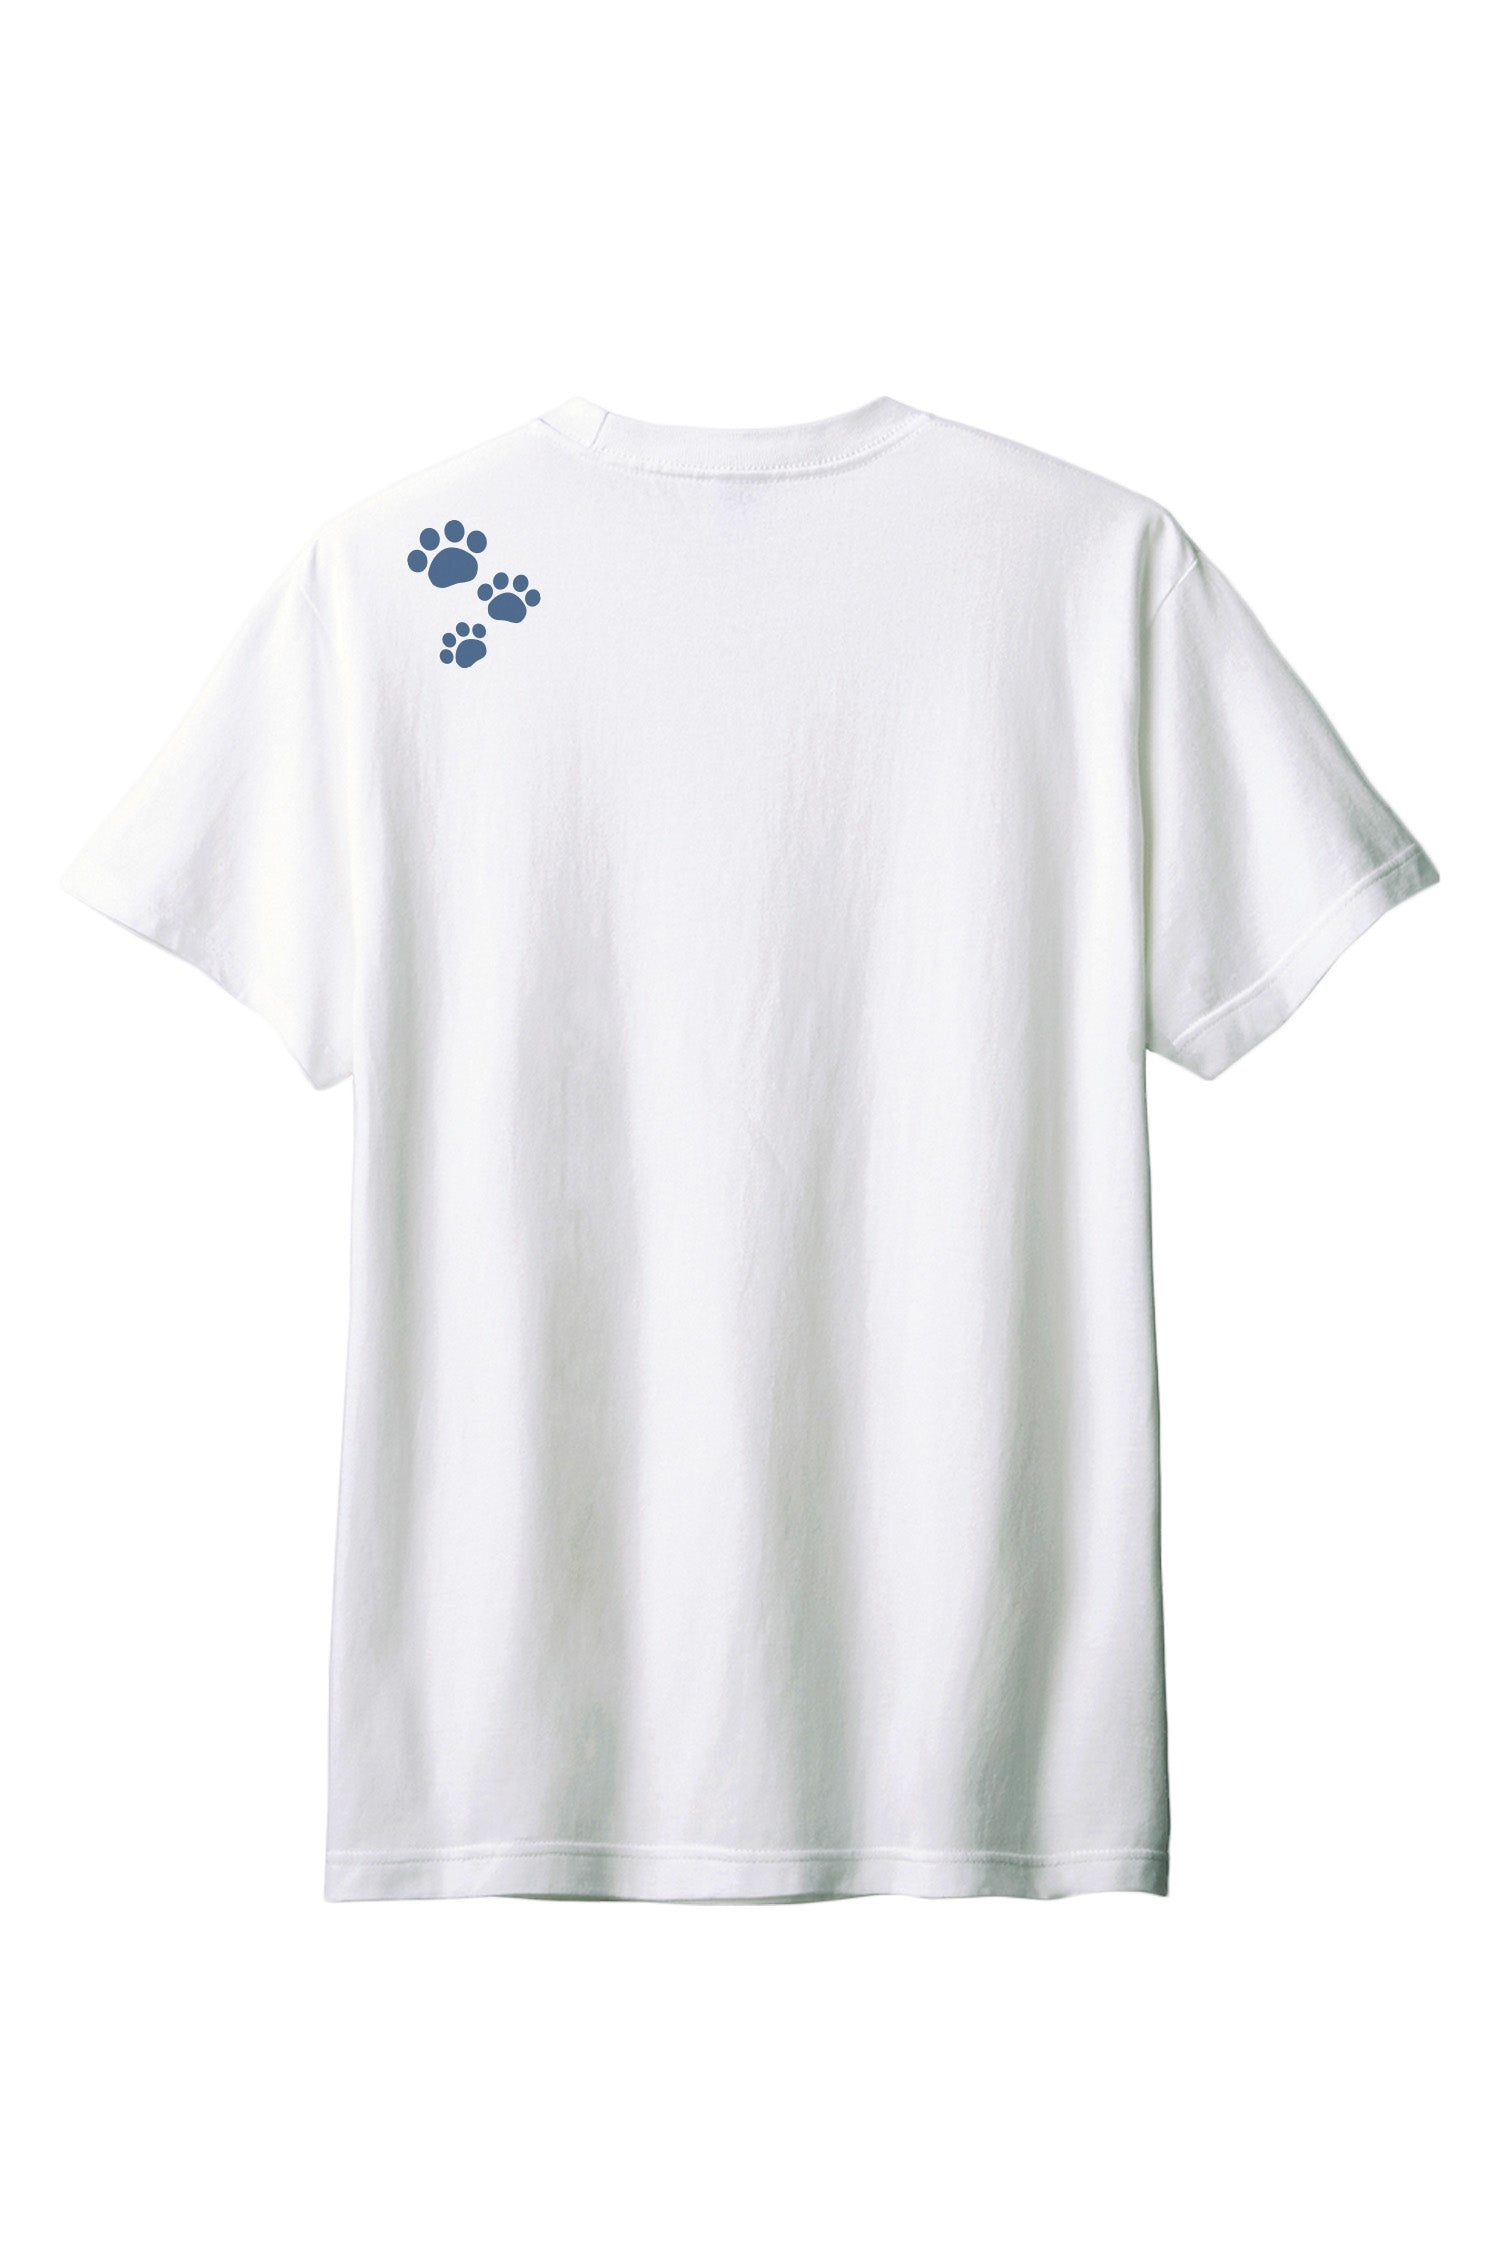 Lee 110 半袖Tシャツ - トップス(Tシャツ